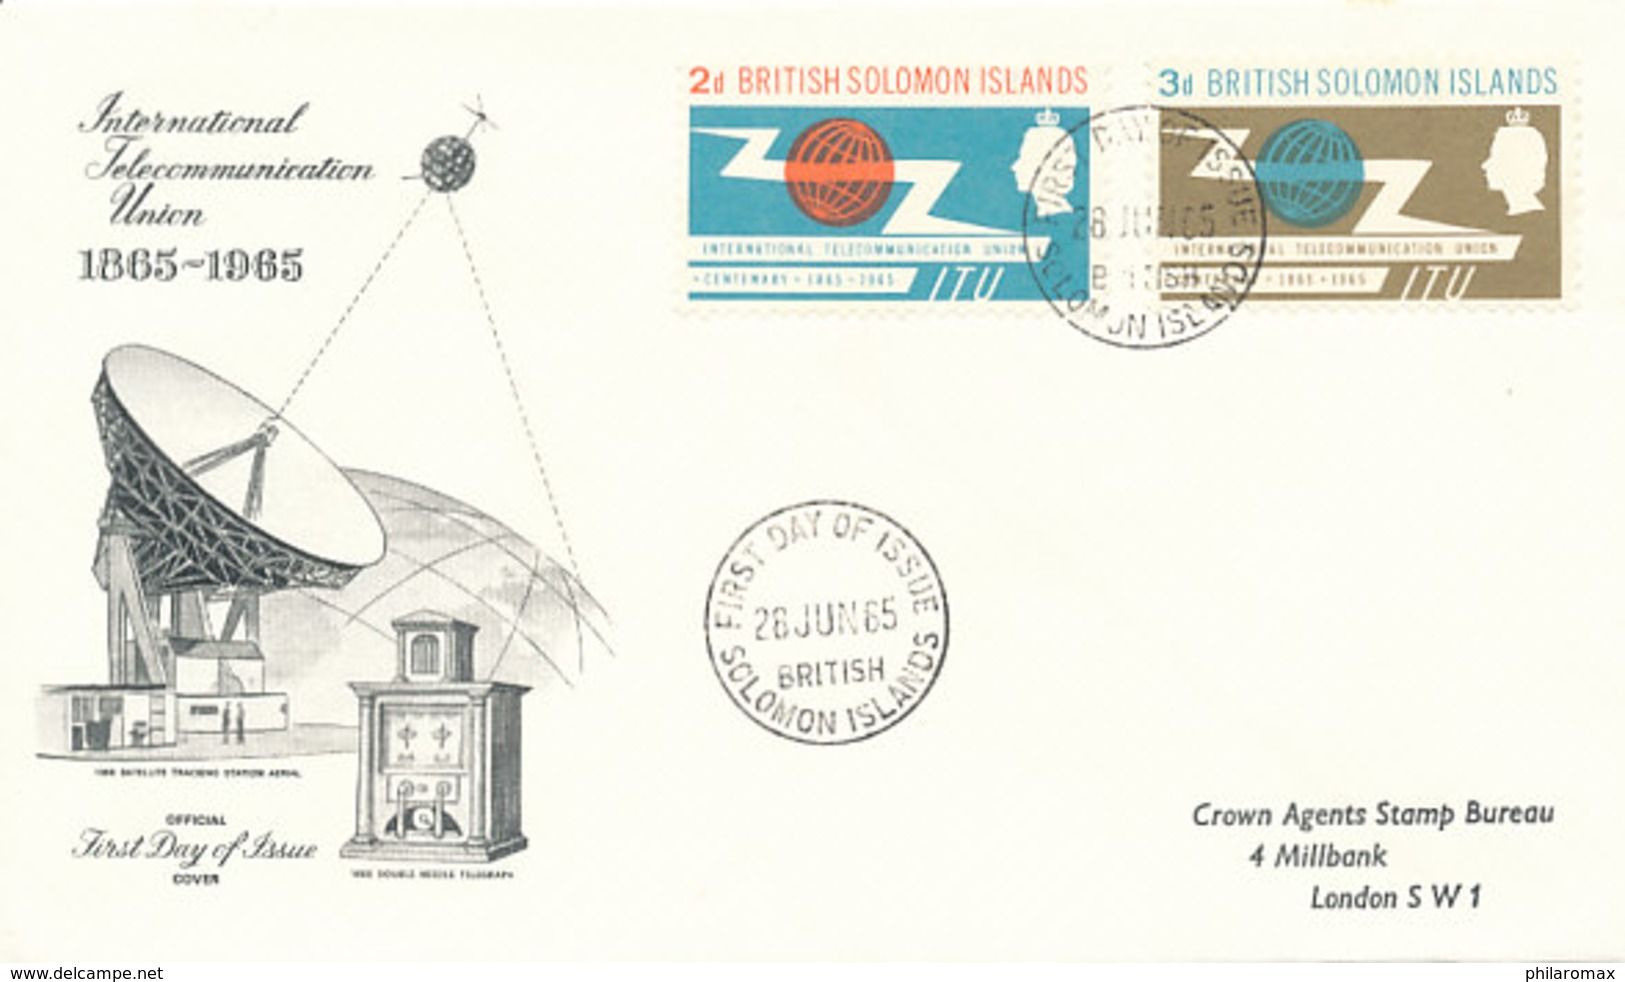 DC-1497 - FDC 1965 - 100 YEARS TELECOMMUNICATION ITU - UIT - SATELLITE - BRITISH SOLOMON ISLANDS - Télécom